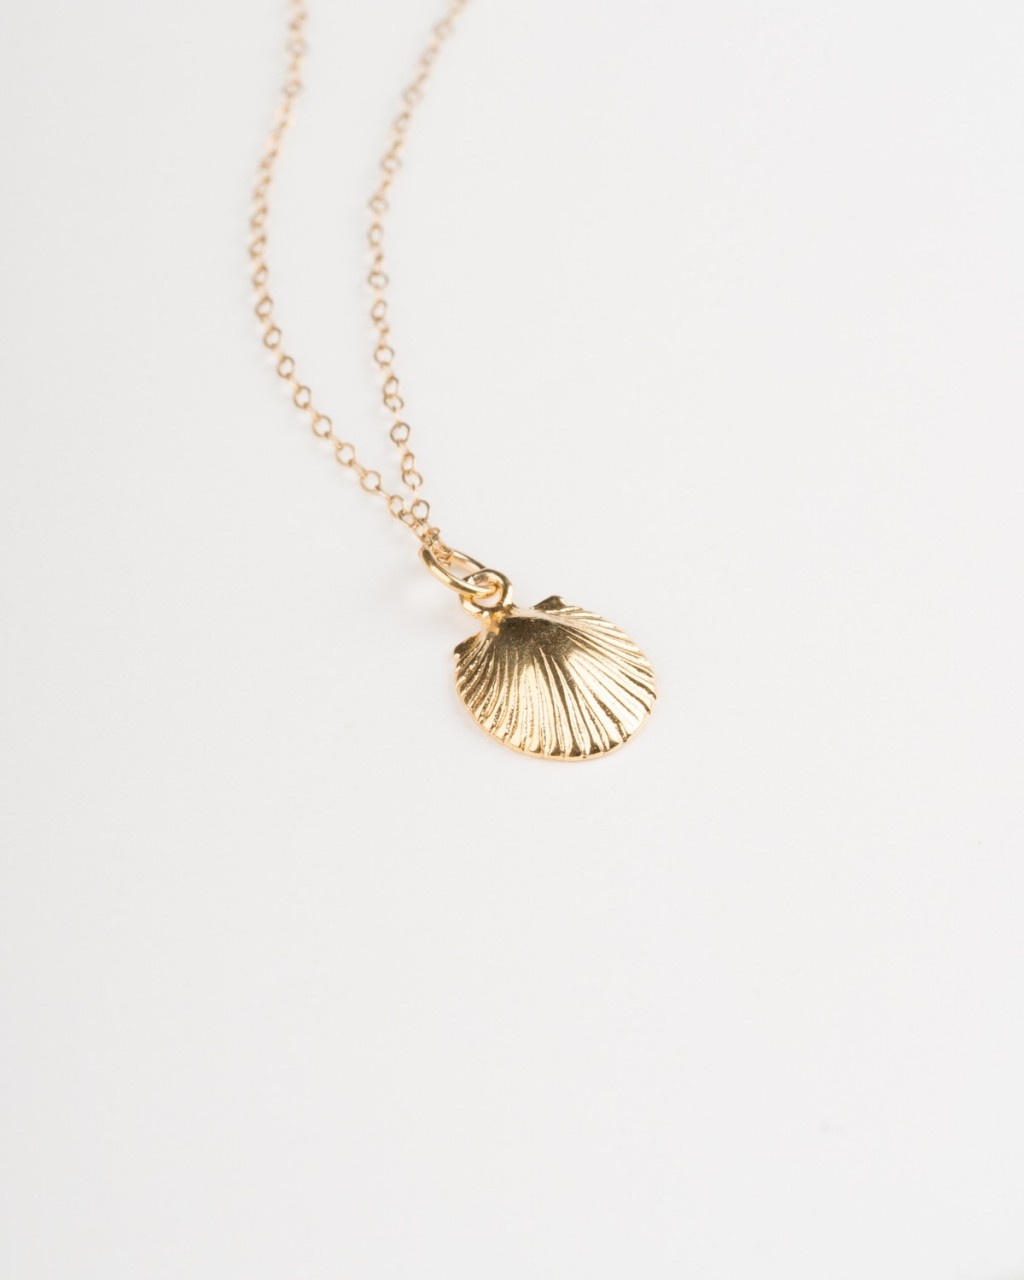 Seashell Necklace - Nautical Jewelry for women - Seashell Jewelry